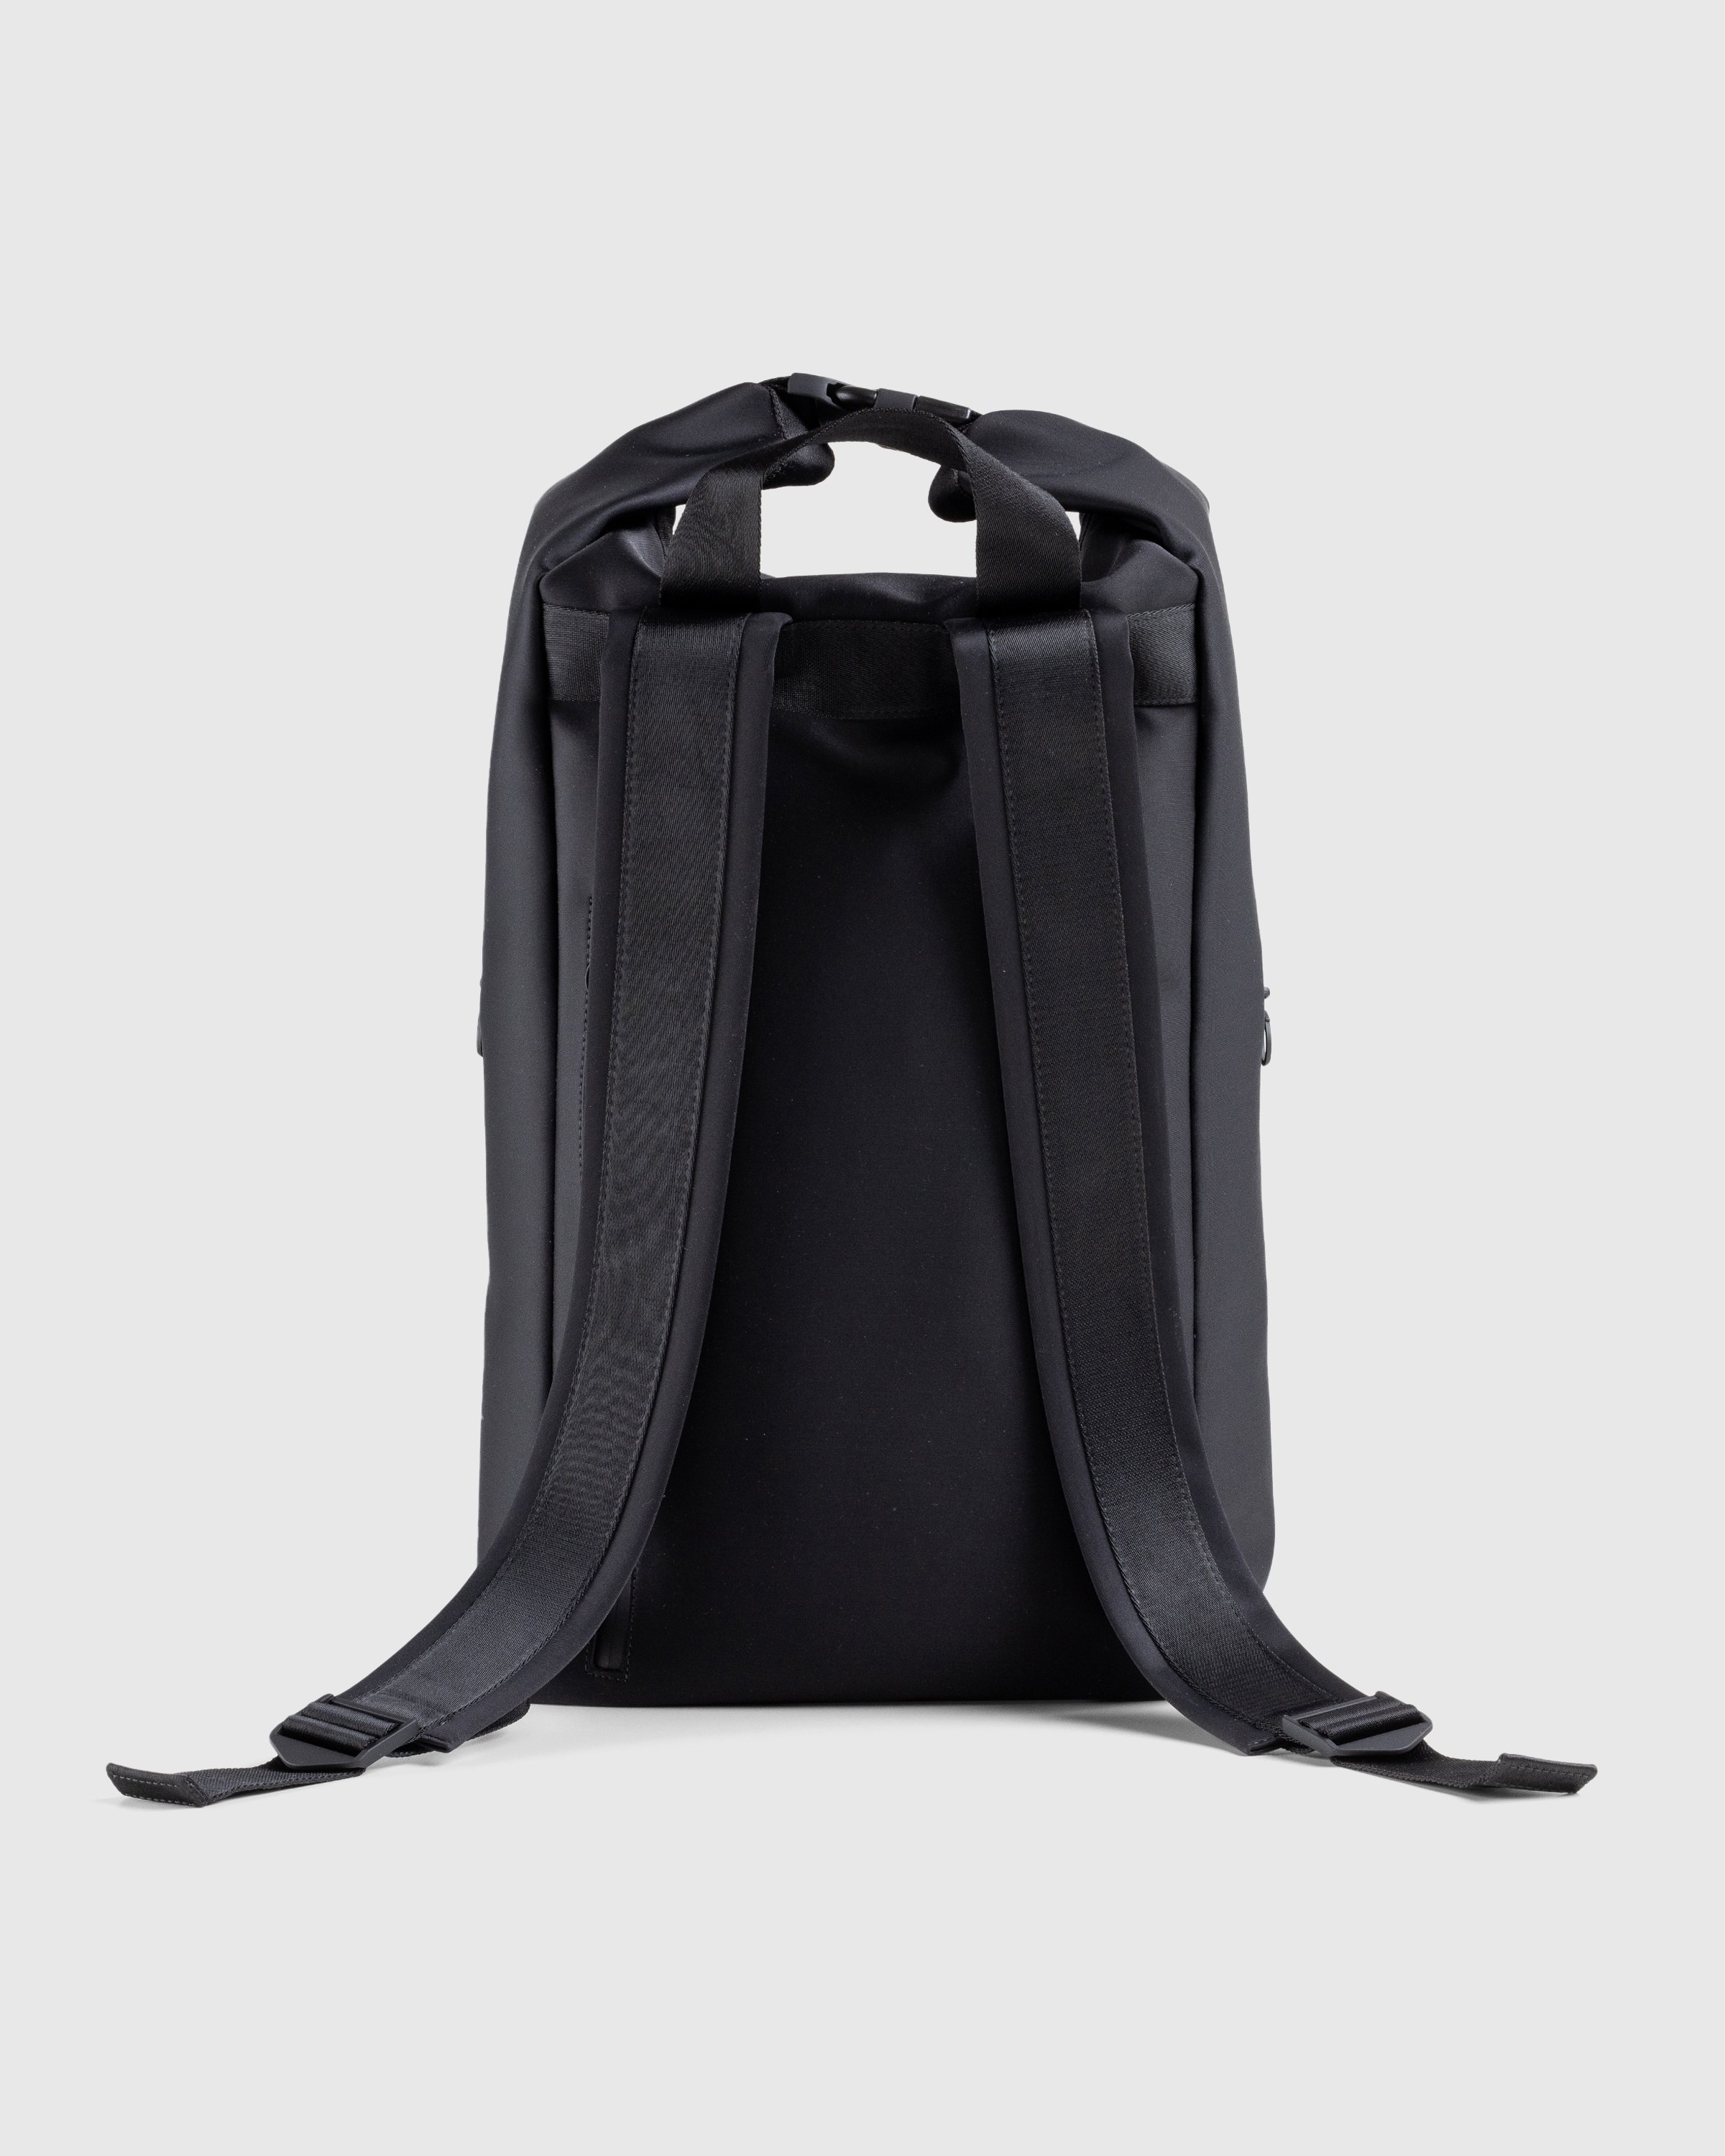 Trussardi - Syla Neoprene Backpack Black - Lifestyle - Black - Image 3